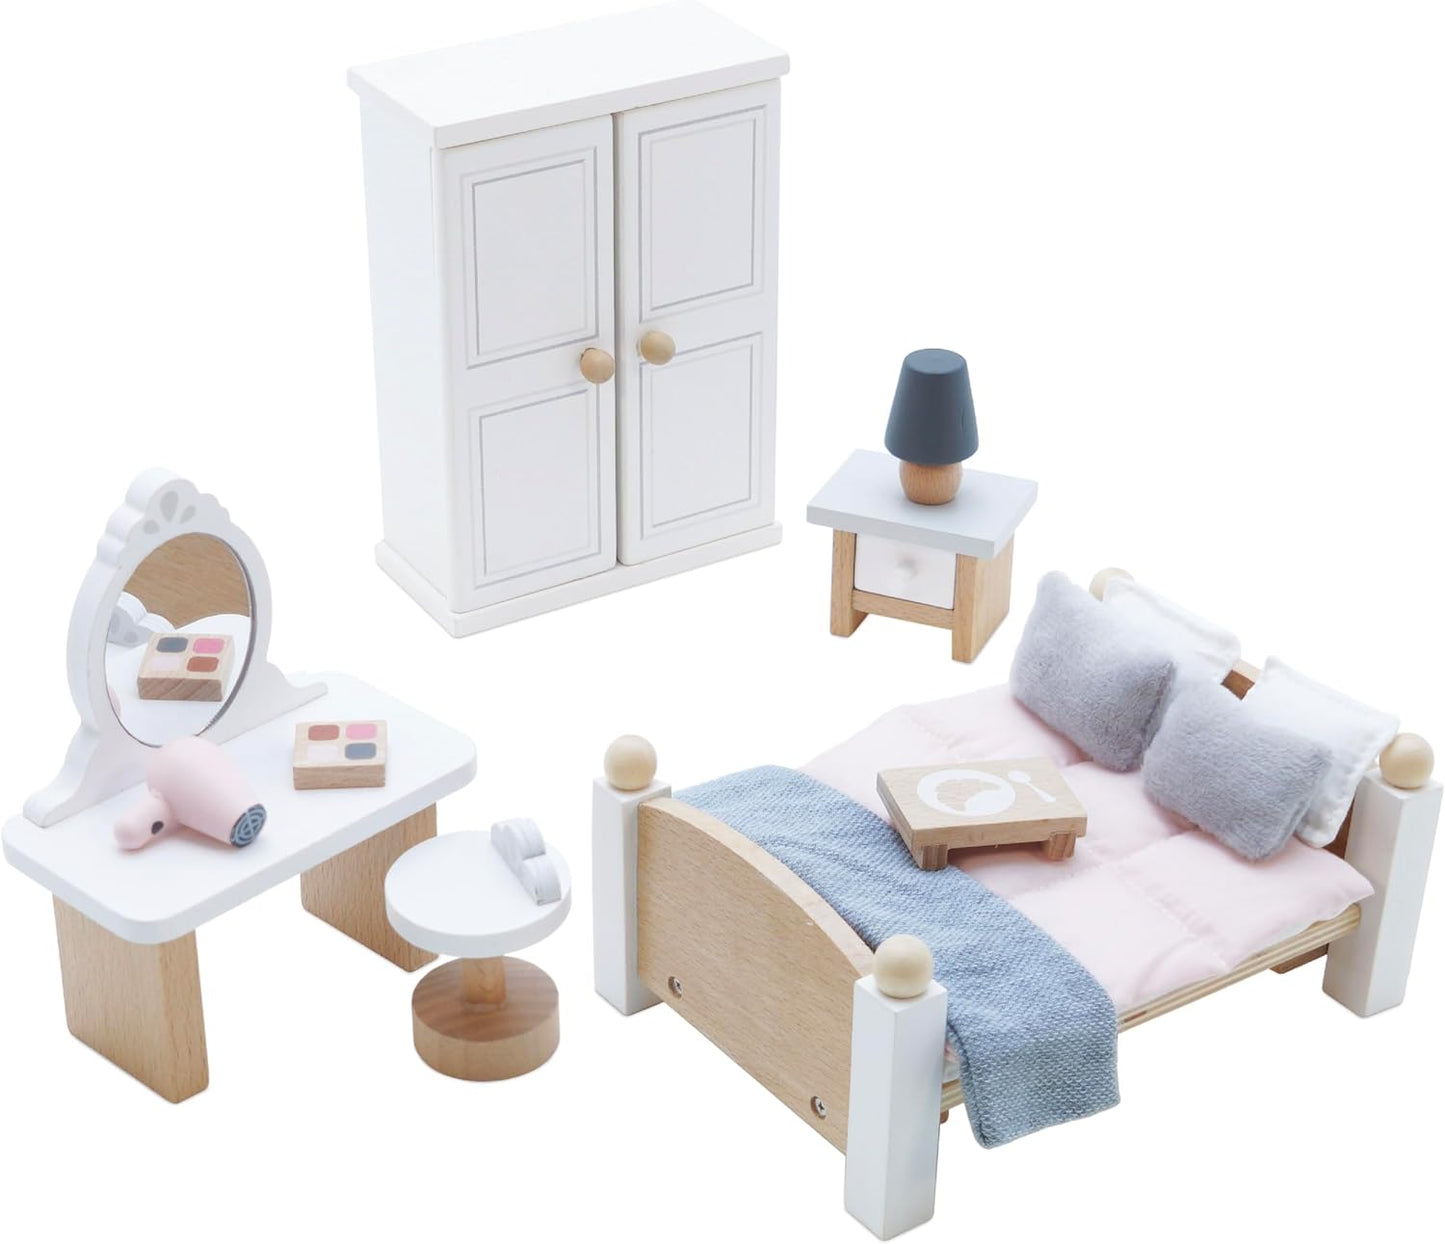 Le Toy Van - Conjunto de acessórios para casa de bonecas do quarto principal Daisylane de madeira para casas de bonecas | Conjuntos de móveis para casas de bonecas - adequados para maiores de 3 anos